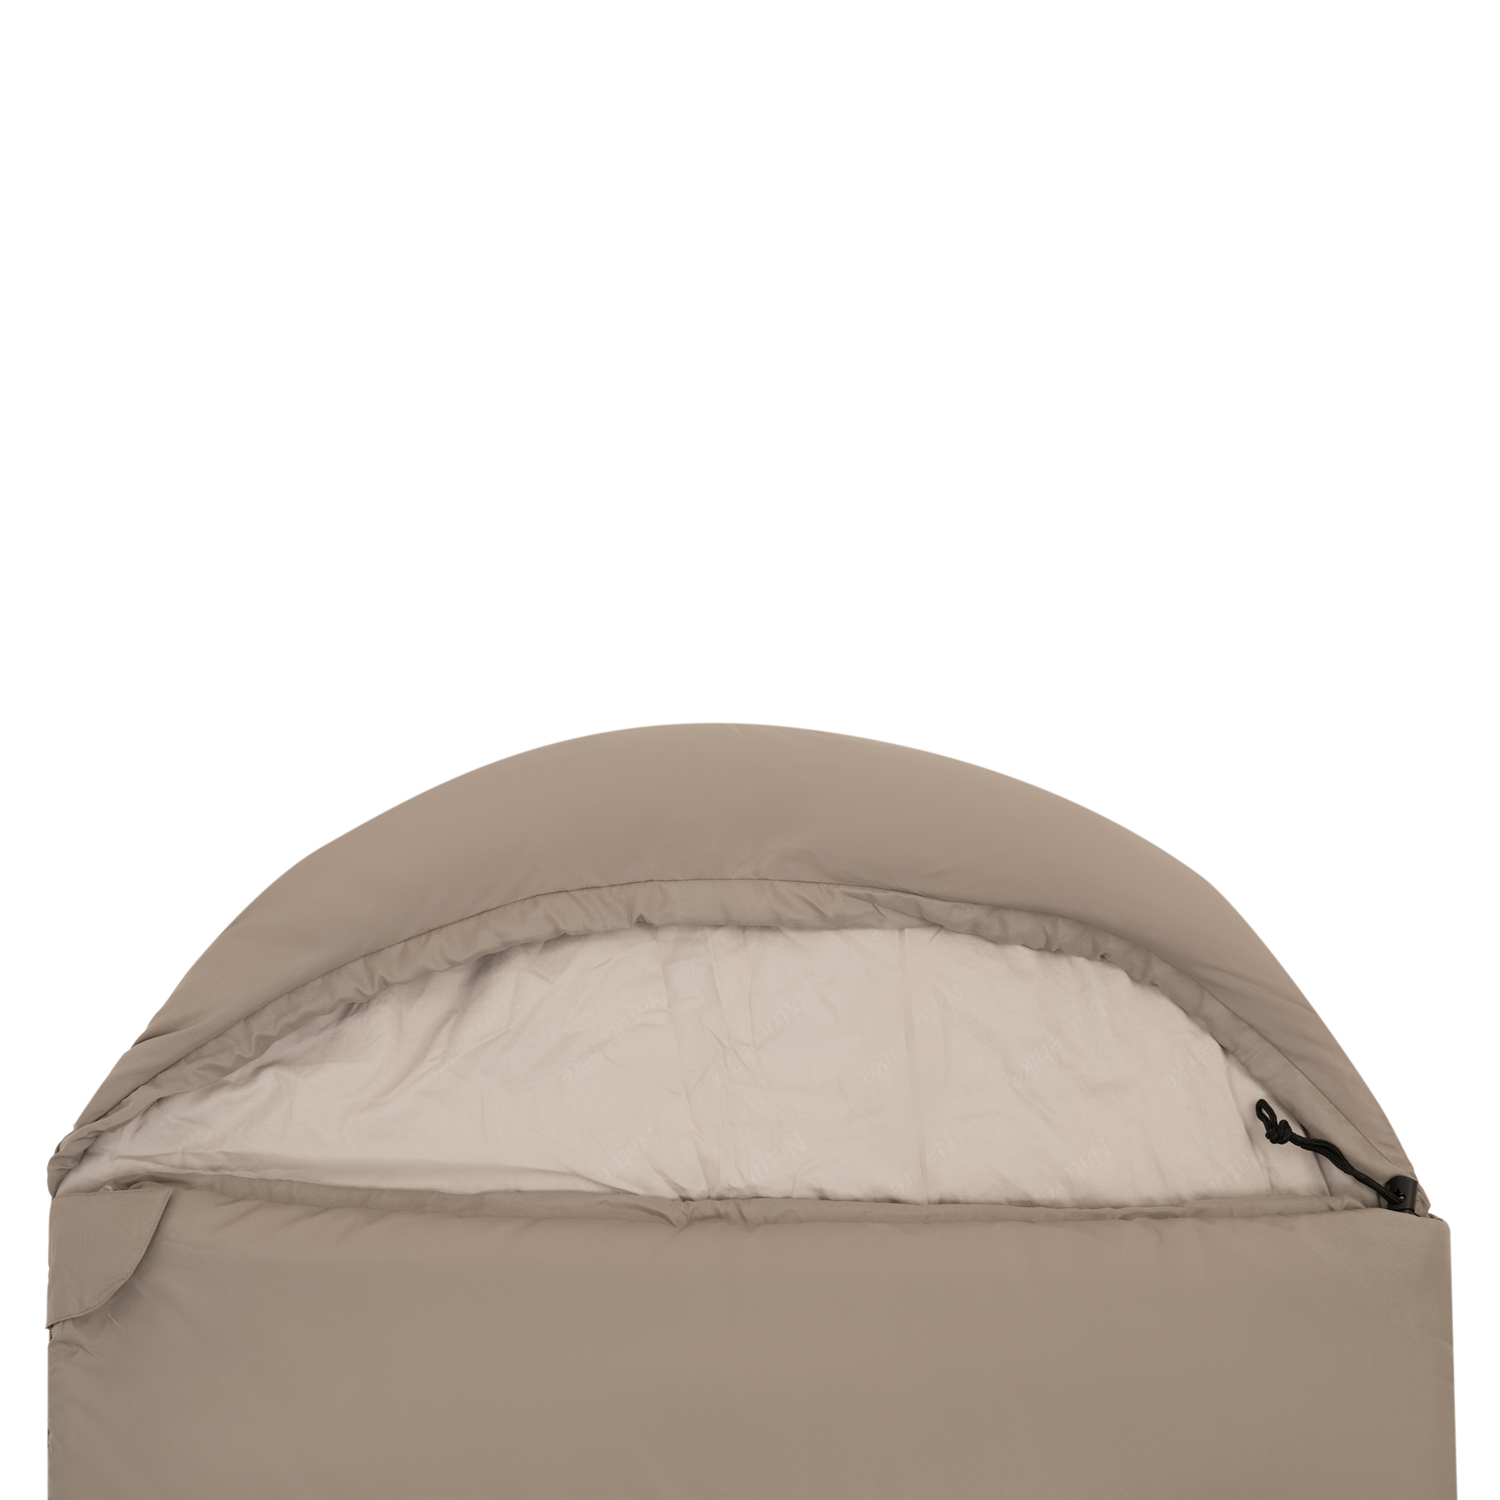 Спальник Naturehike Envelop Washable Cotton Sleeping Bag With Hood M400 Right Zipper Green